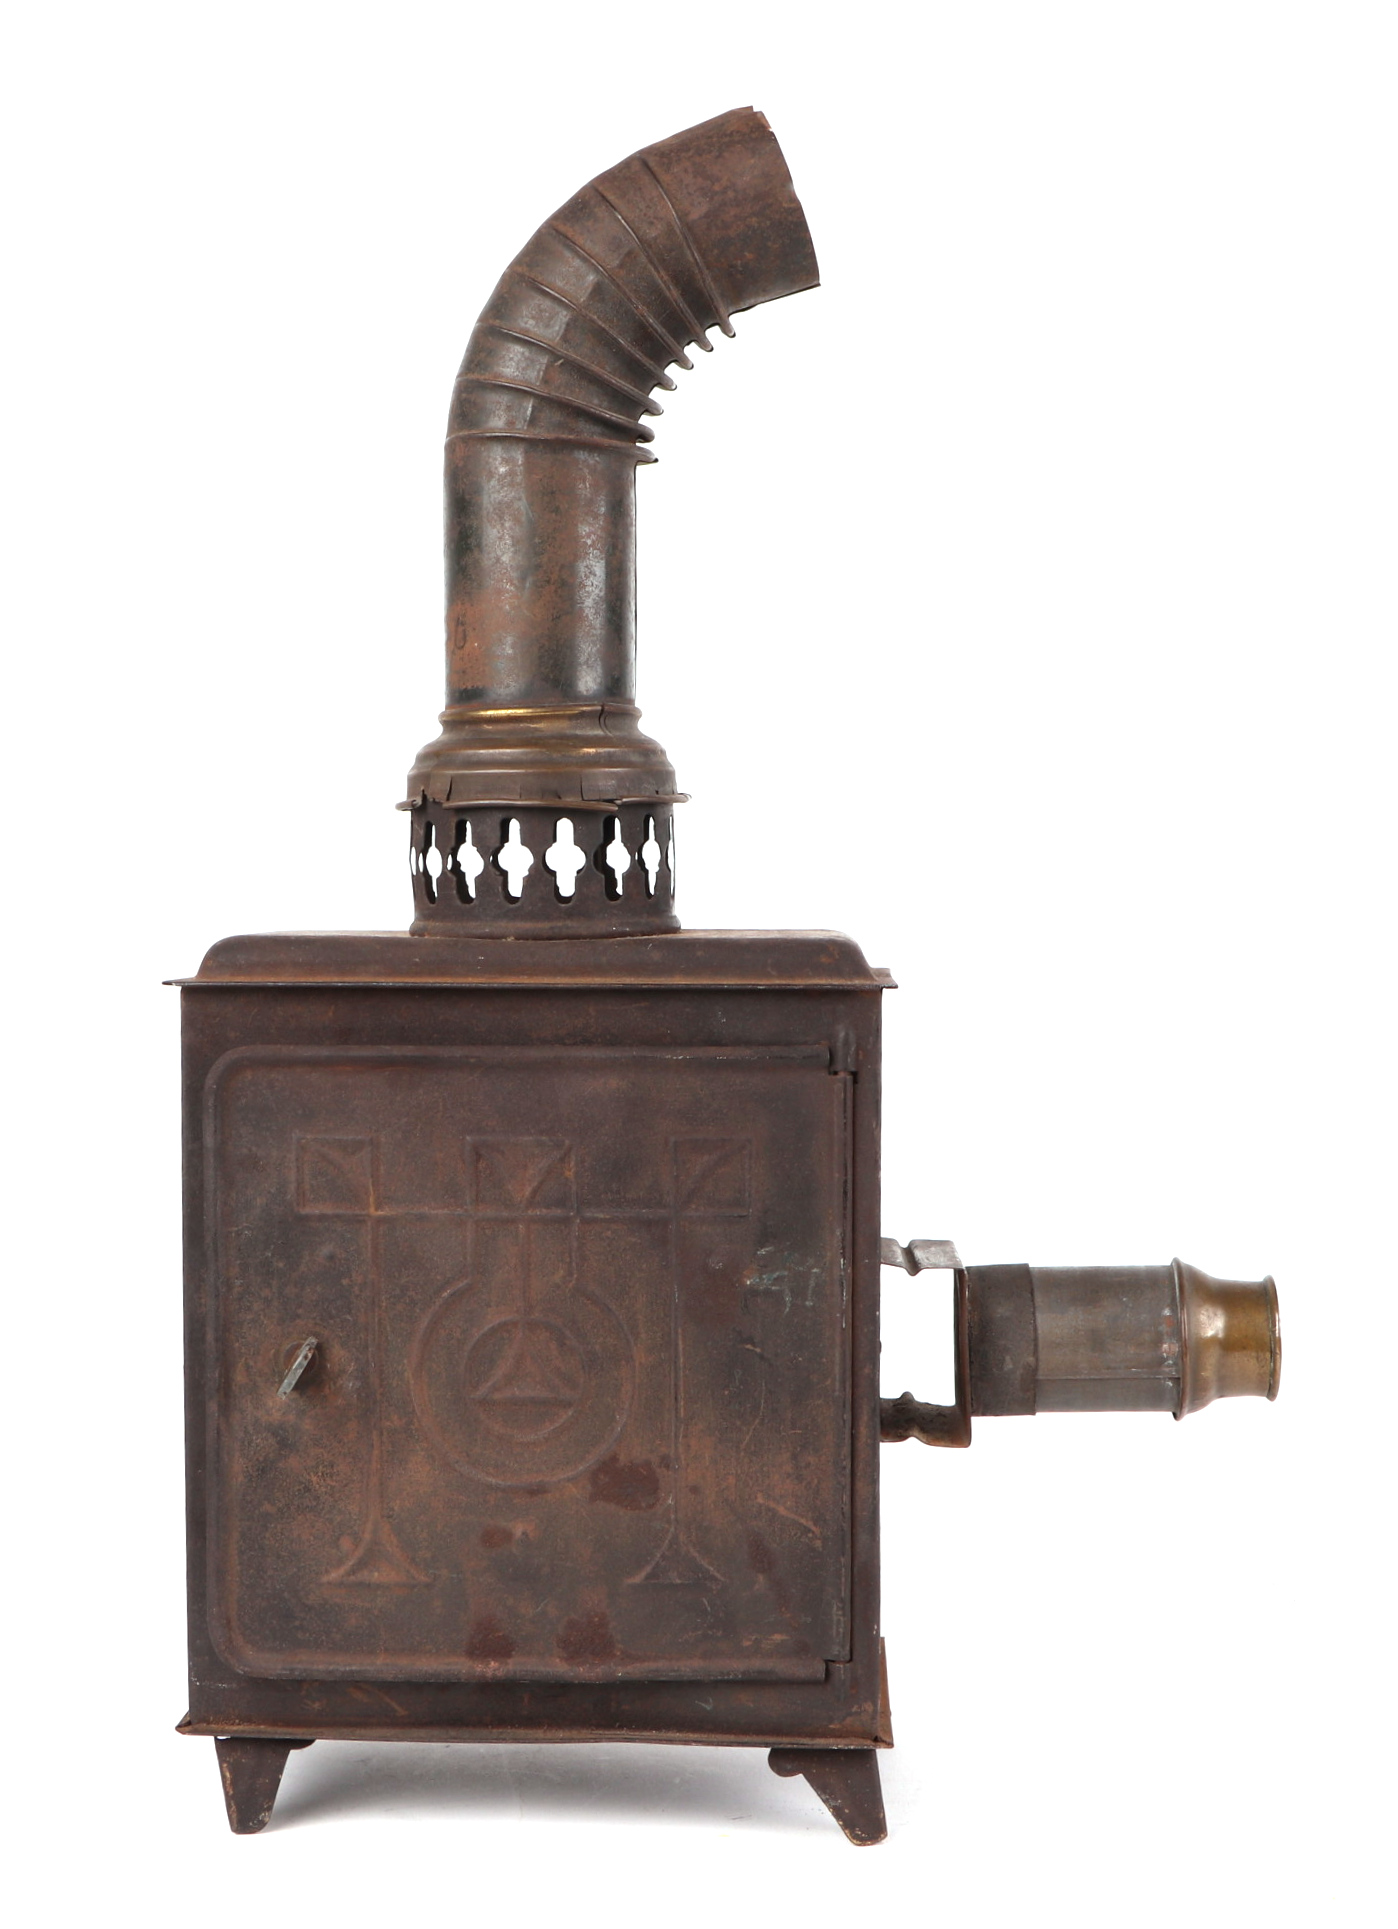 A late Victorian/Edwardian magic lantern with approx 60 glass magic lantern slides. - Image 3 of 3